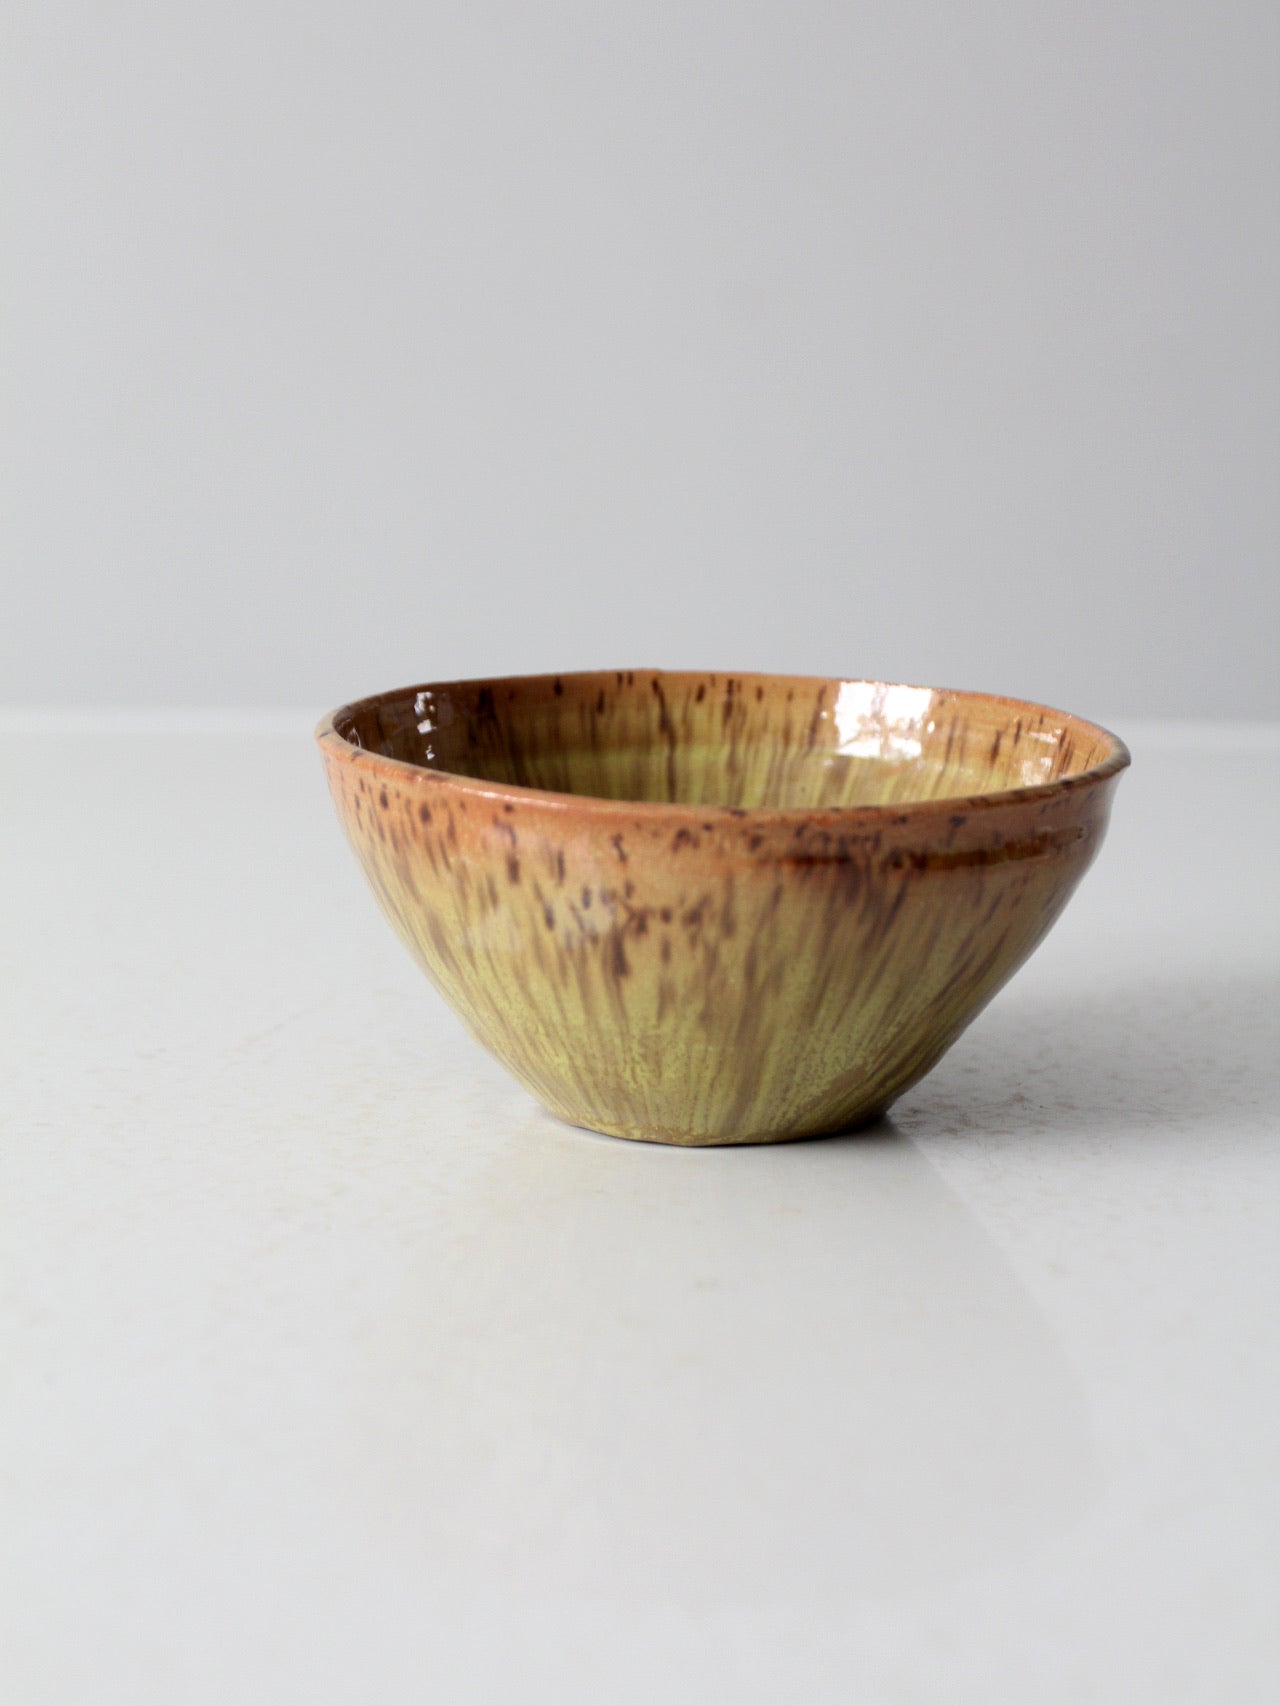 vintage studio pottery wood bowl